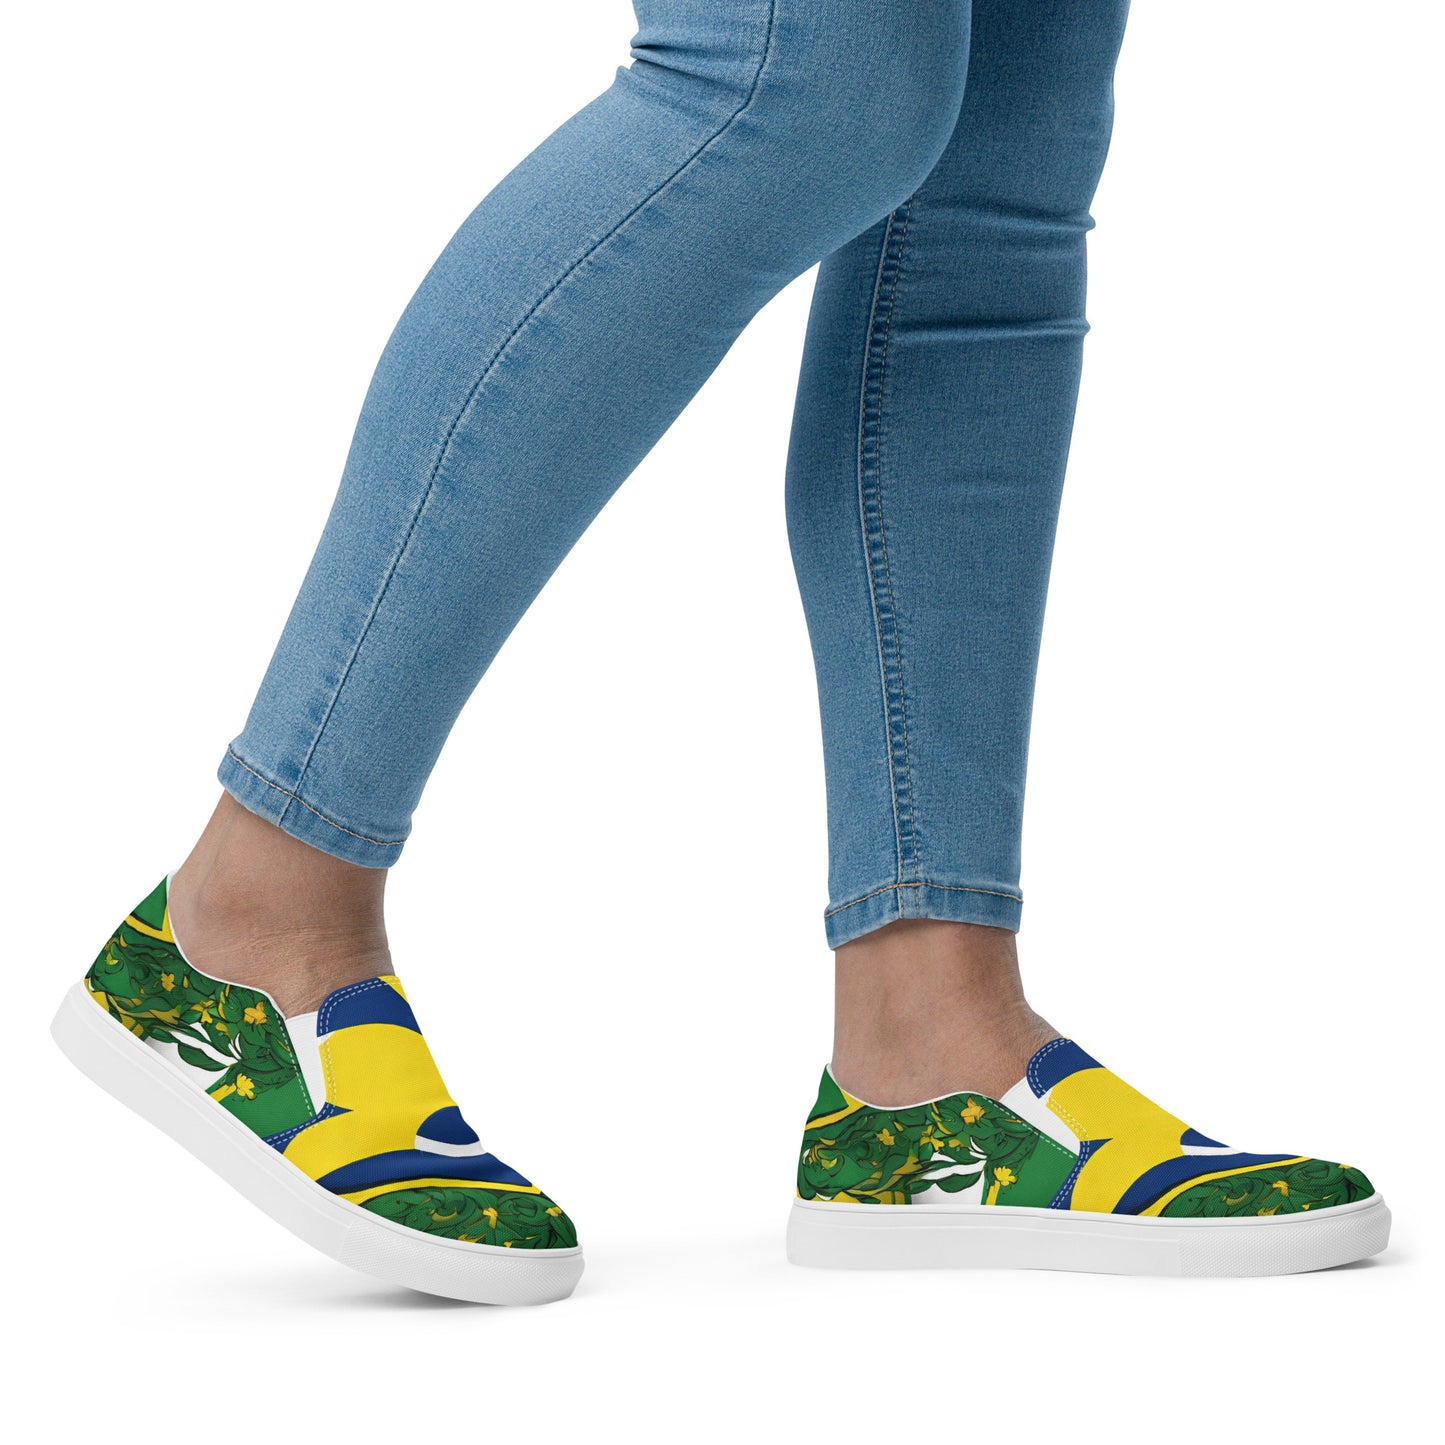 Women’s slip-on canvas shoes / Brasil women Shoes